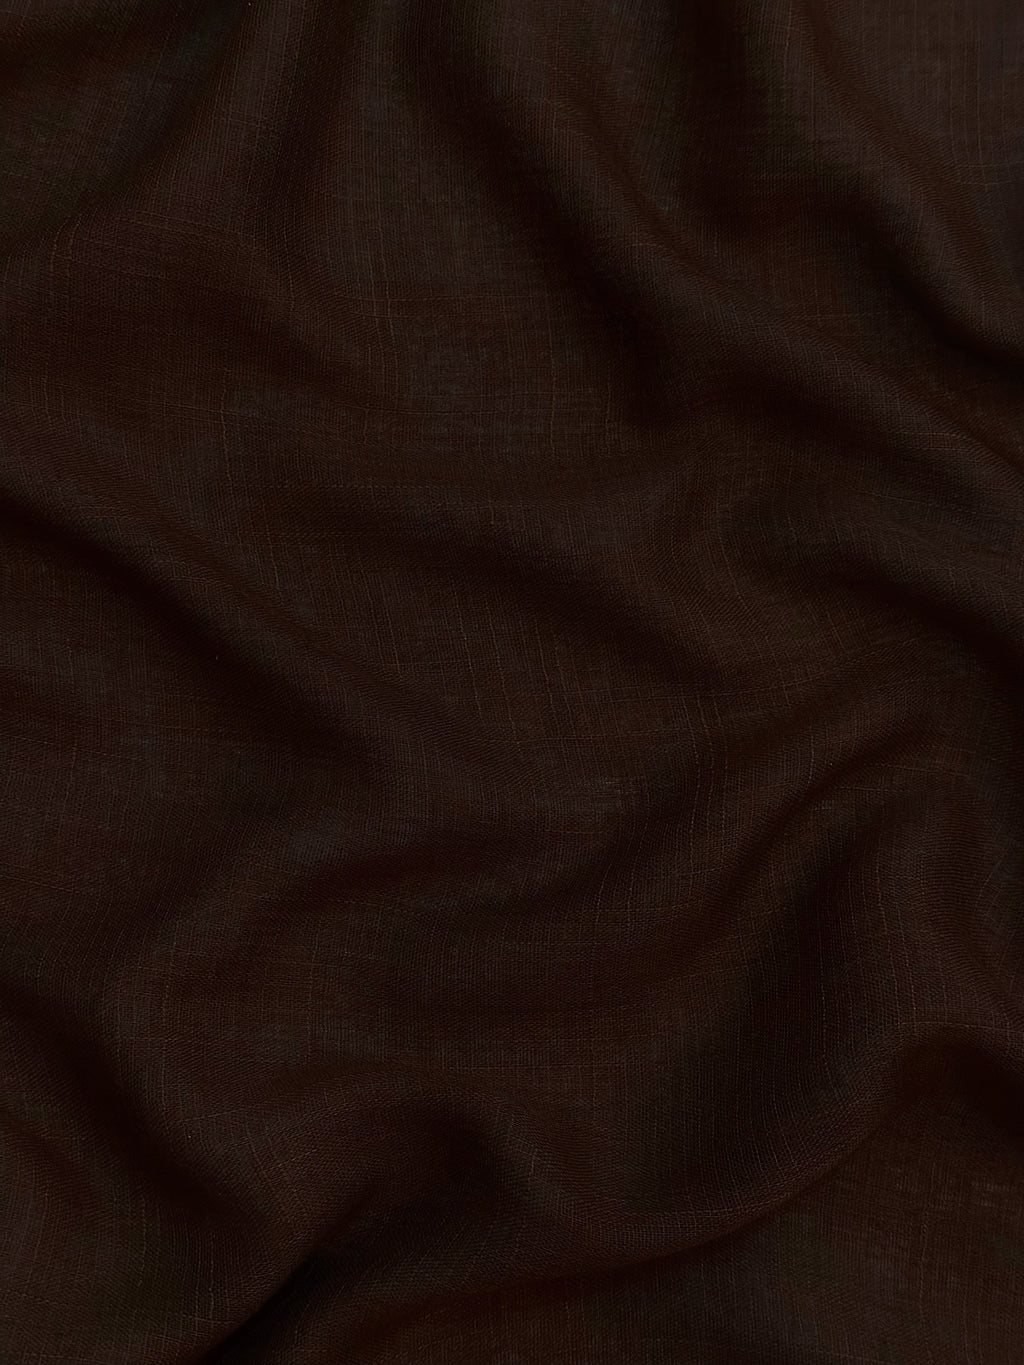 Textured Lawn Viscose - Nutella